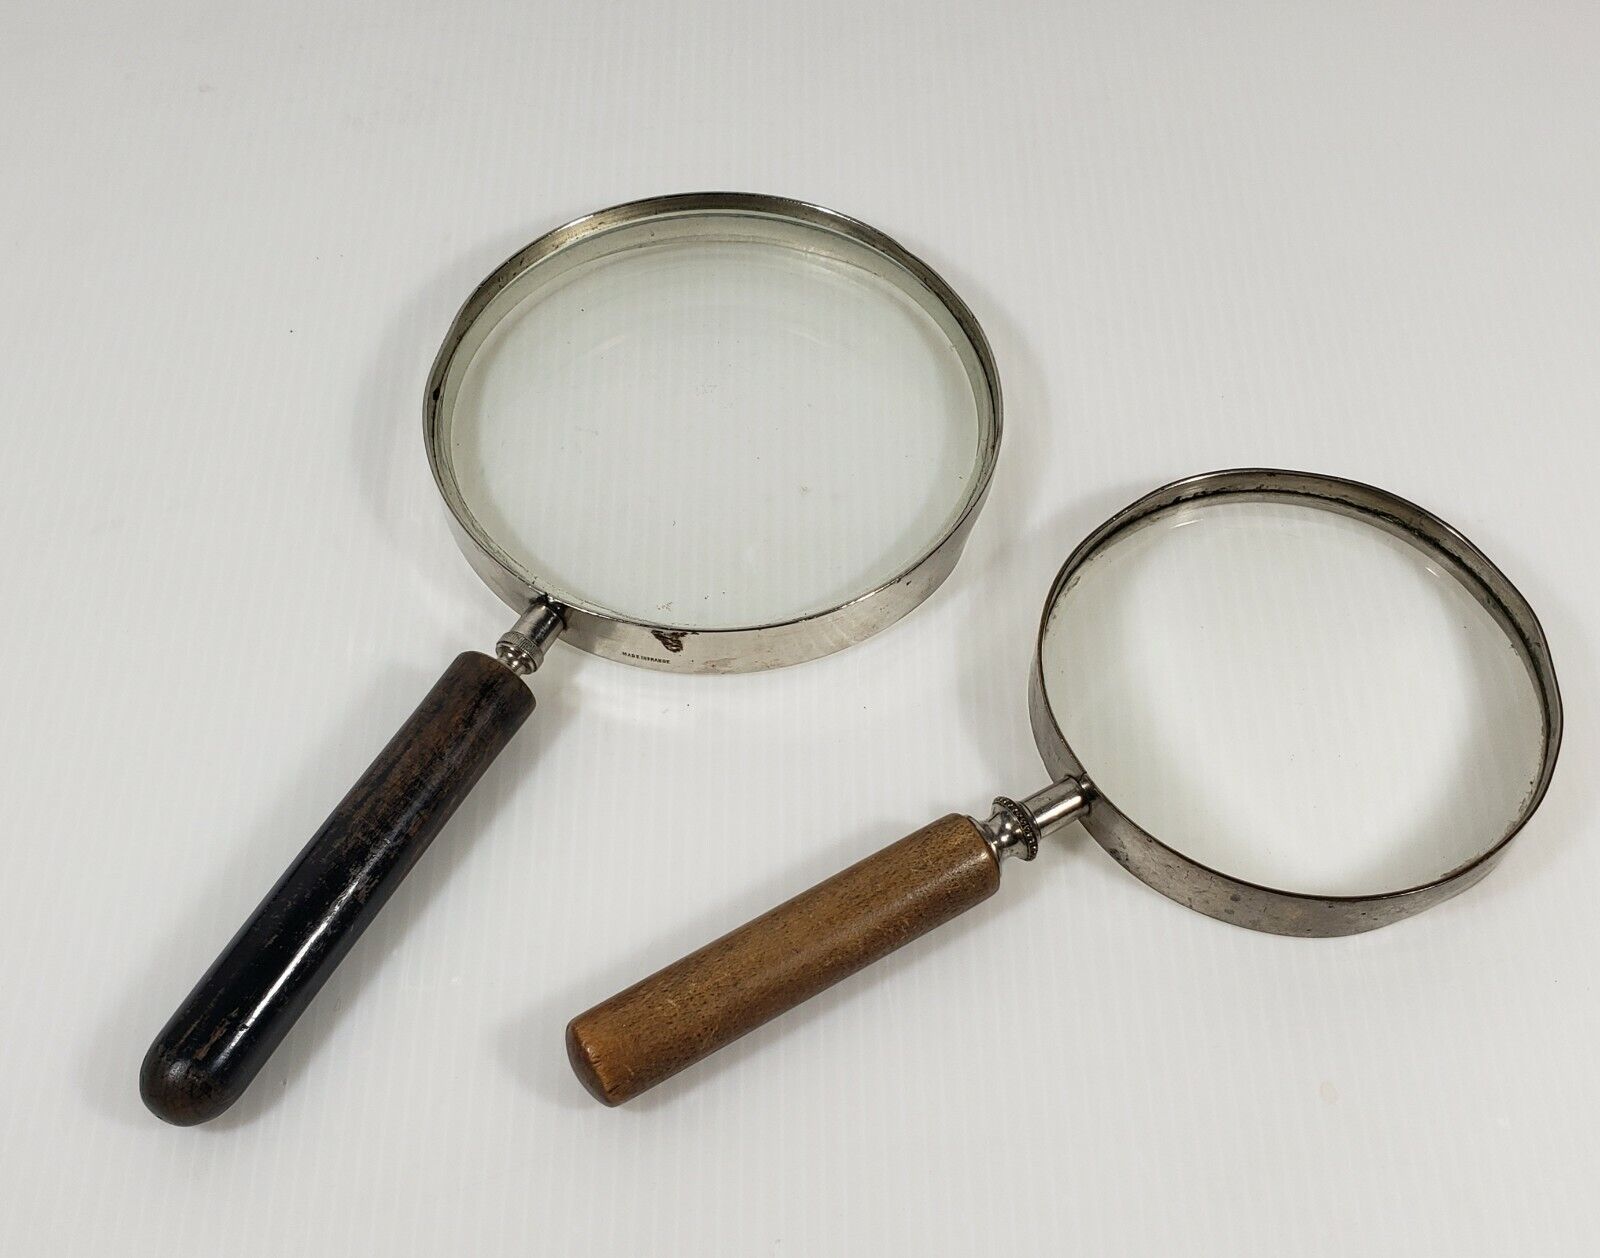 2 Vintage Magnifying Glasses, 1 Concave & 1 Convex, France 